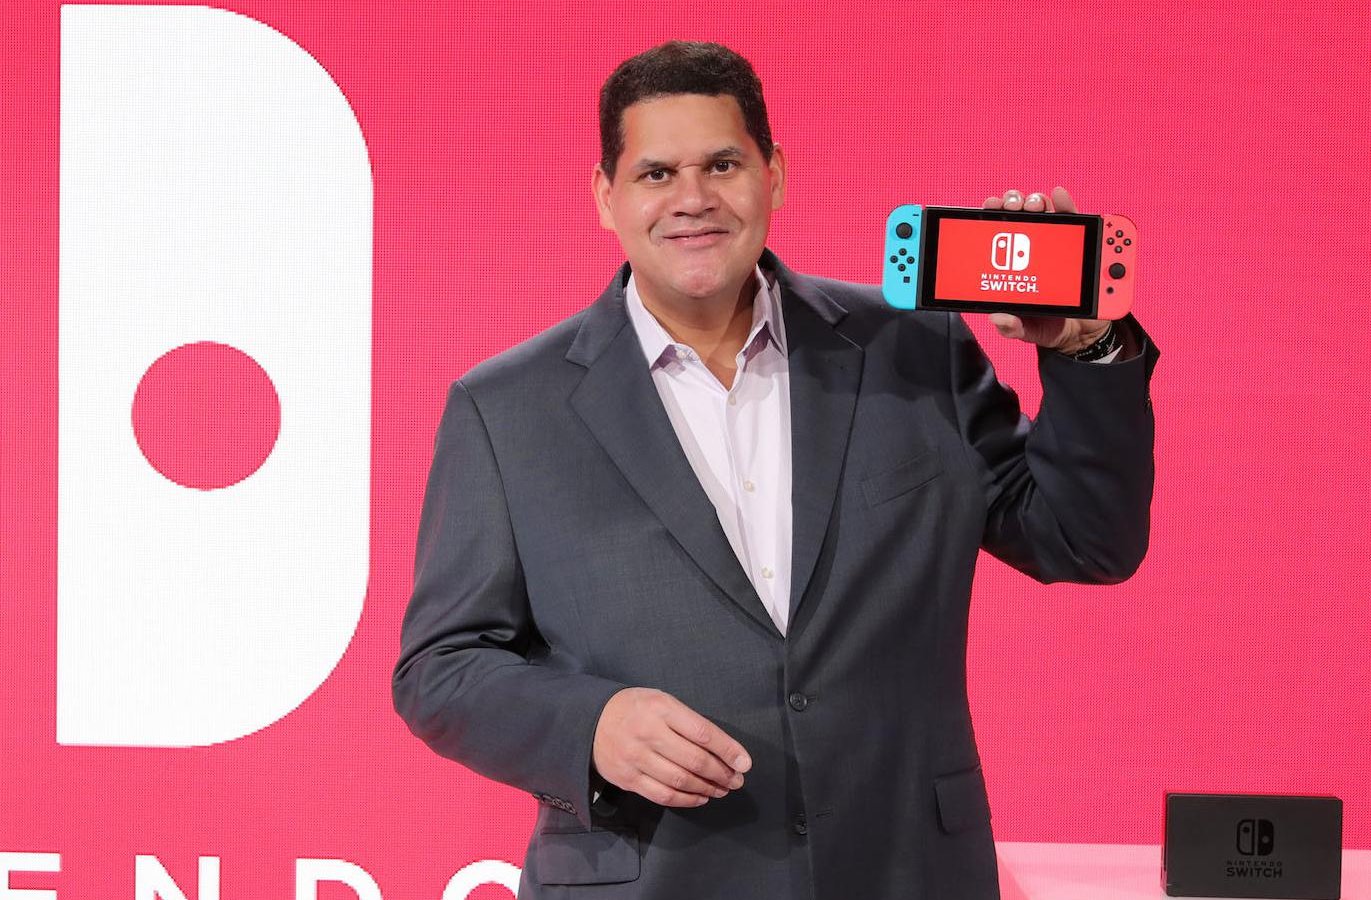 Nintendo Switch 2, spunta un brevetto che è un mix tra Switch, DS e Wii U